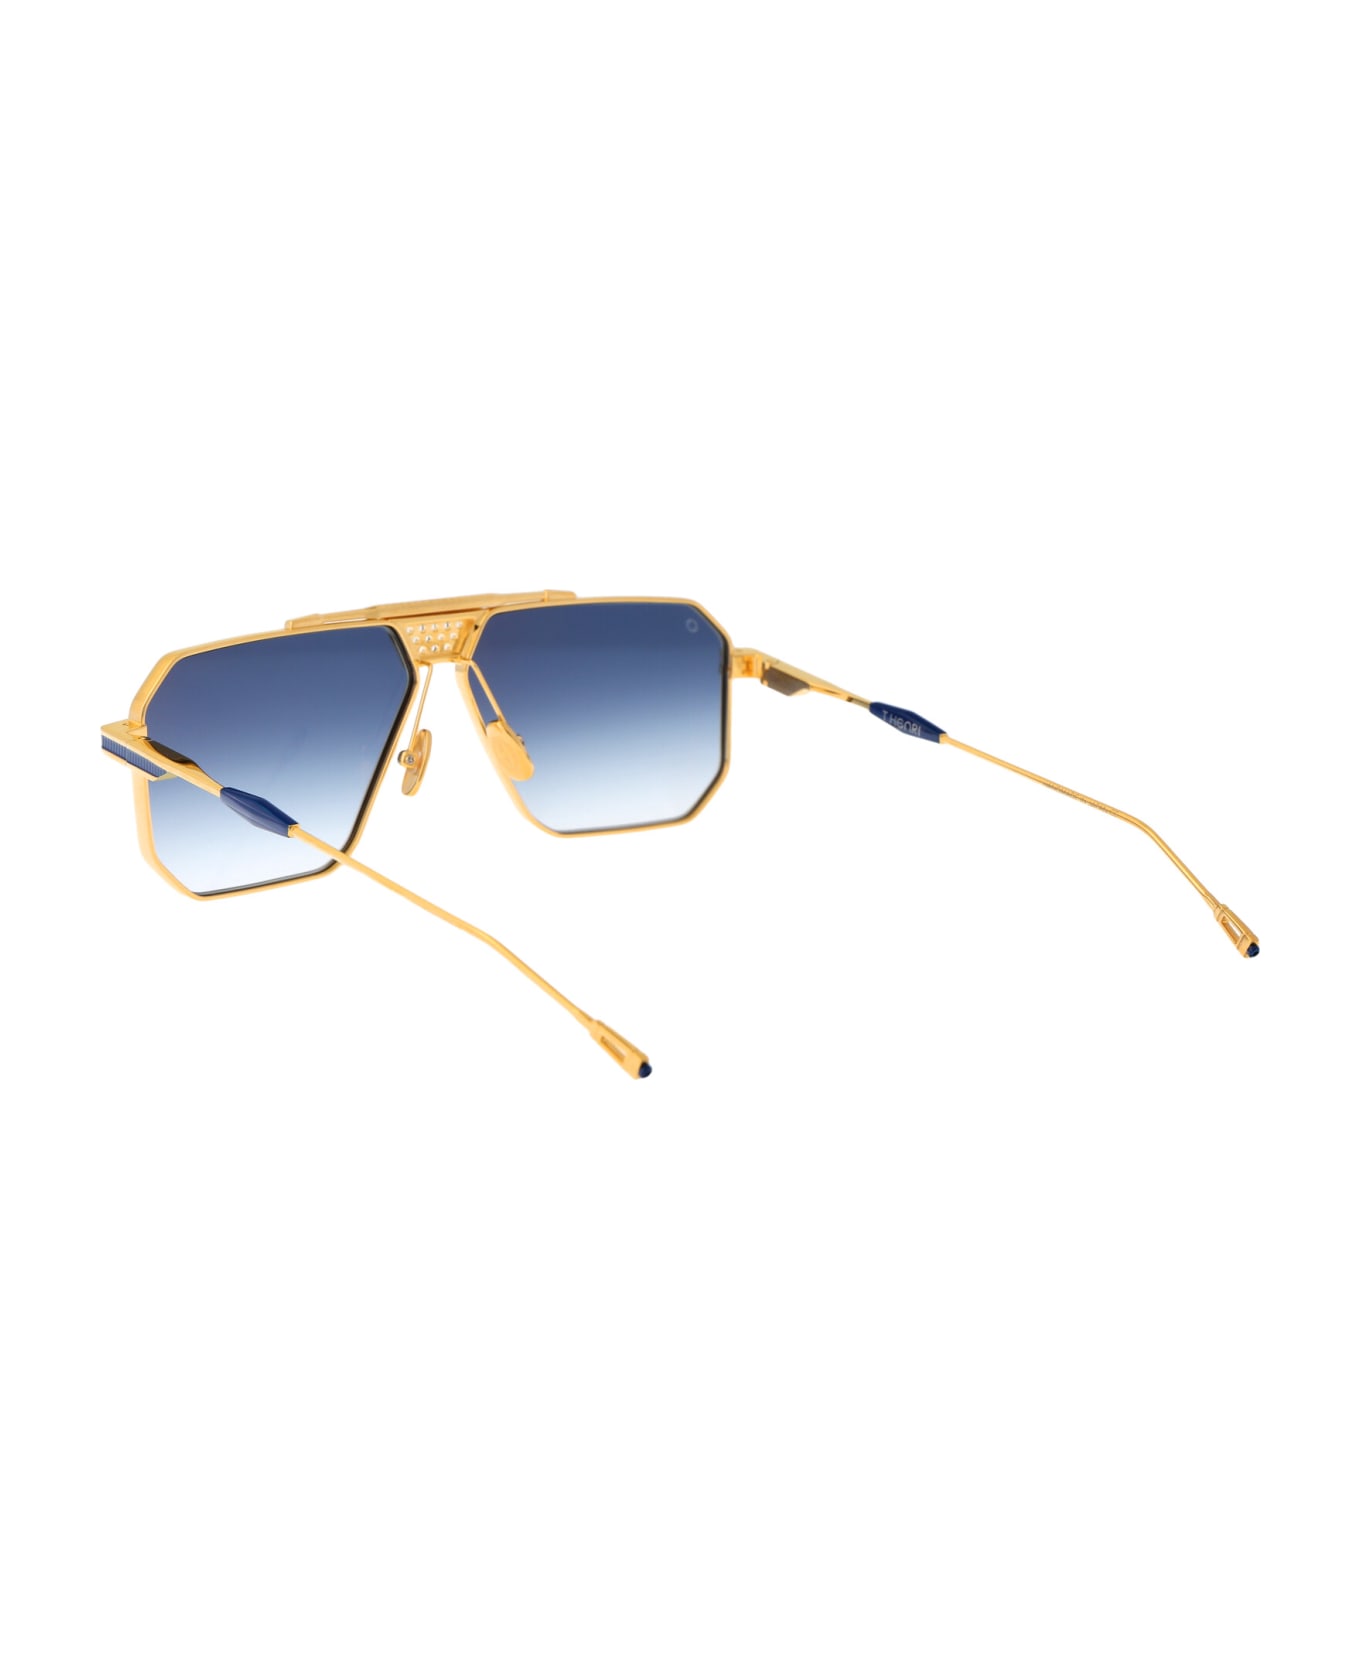 T Henri Berlinette Sunglasses - L'OR BLEU